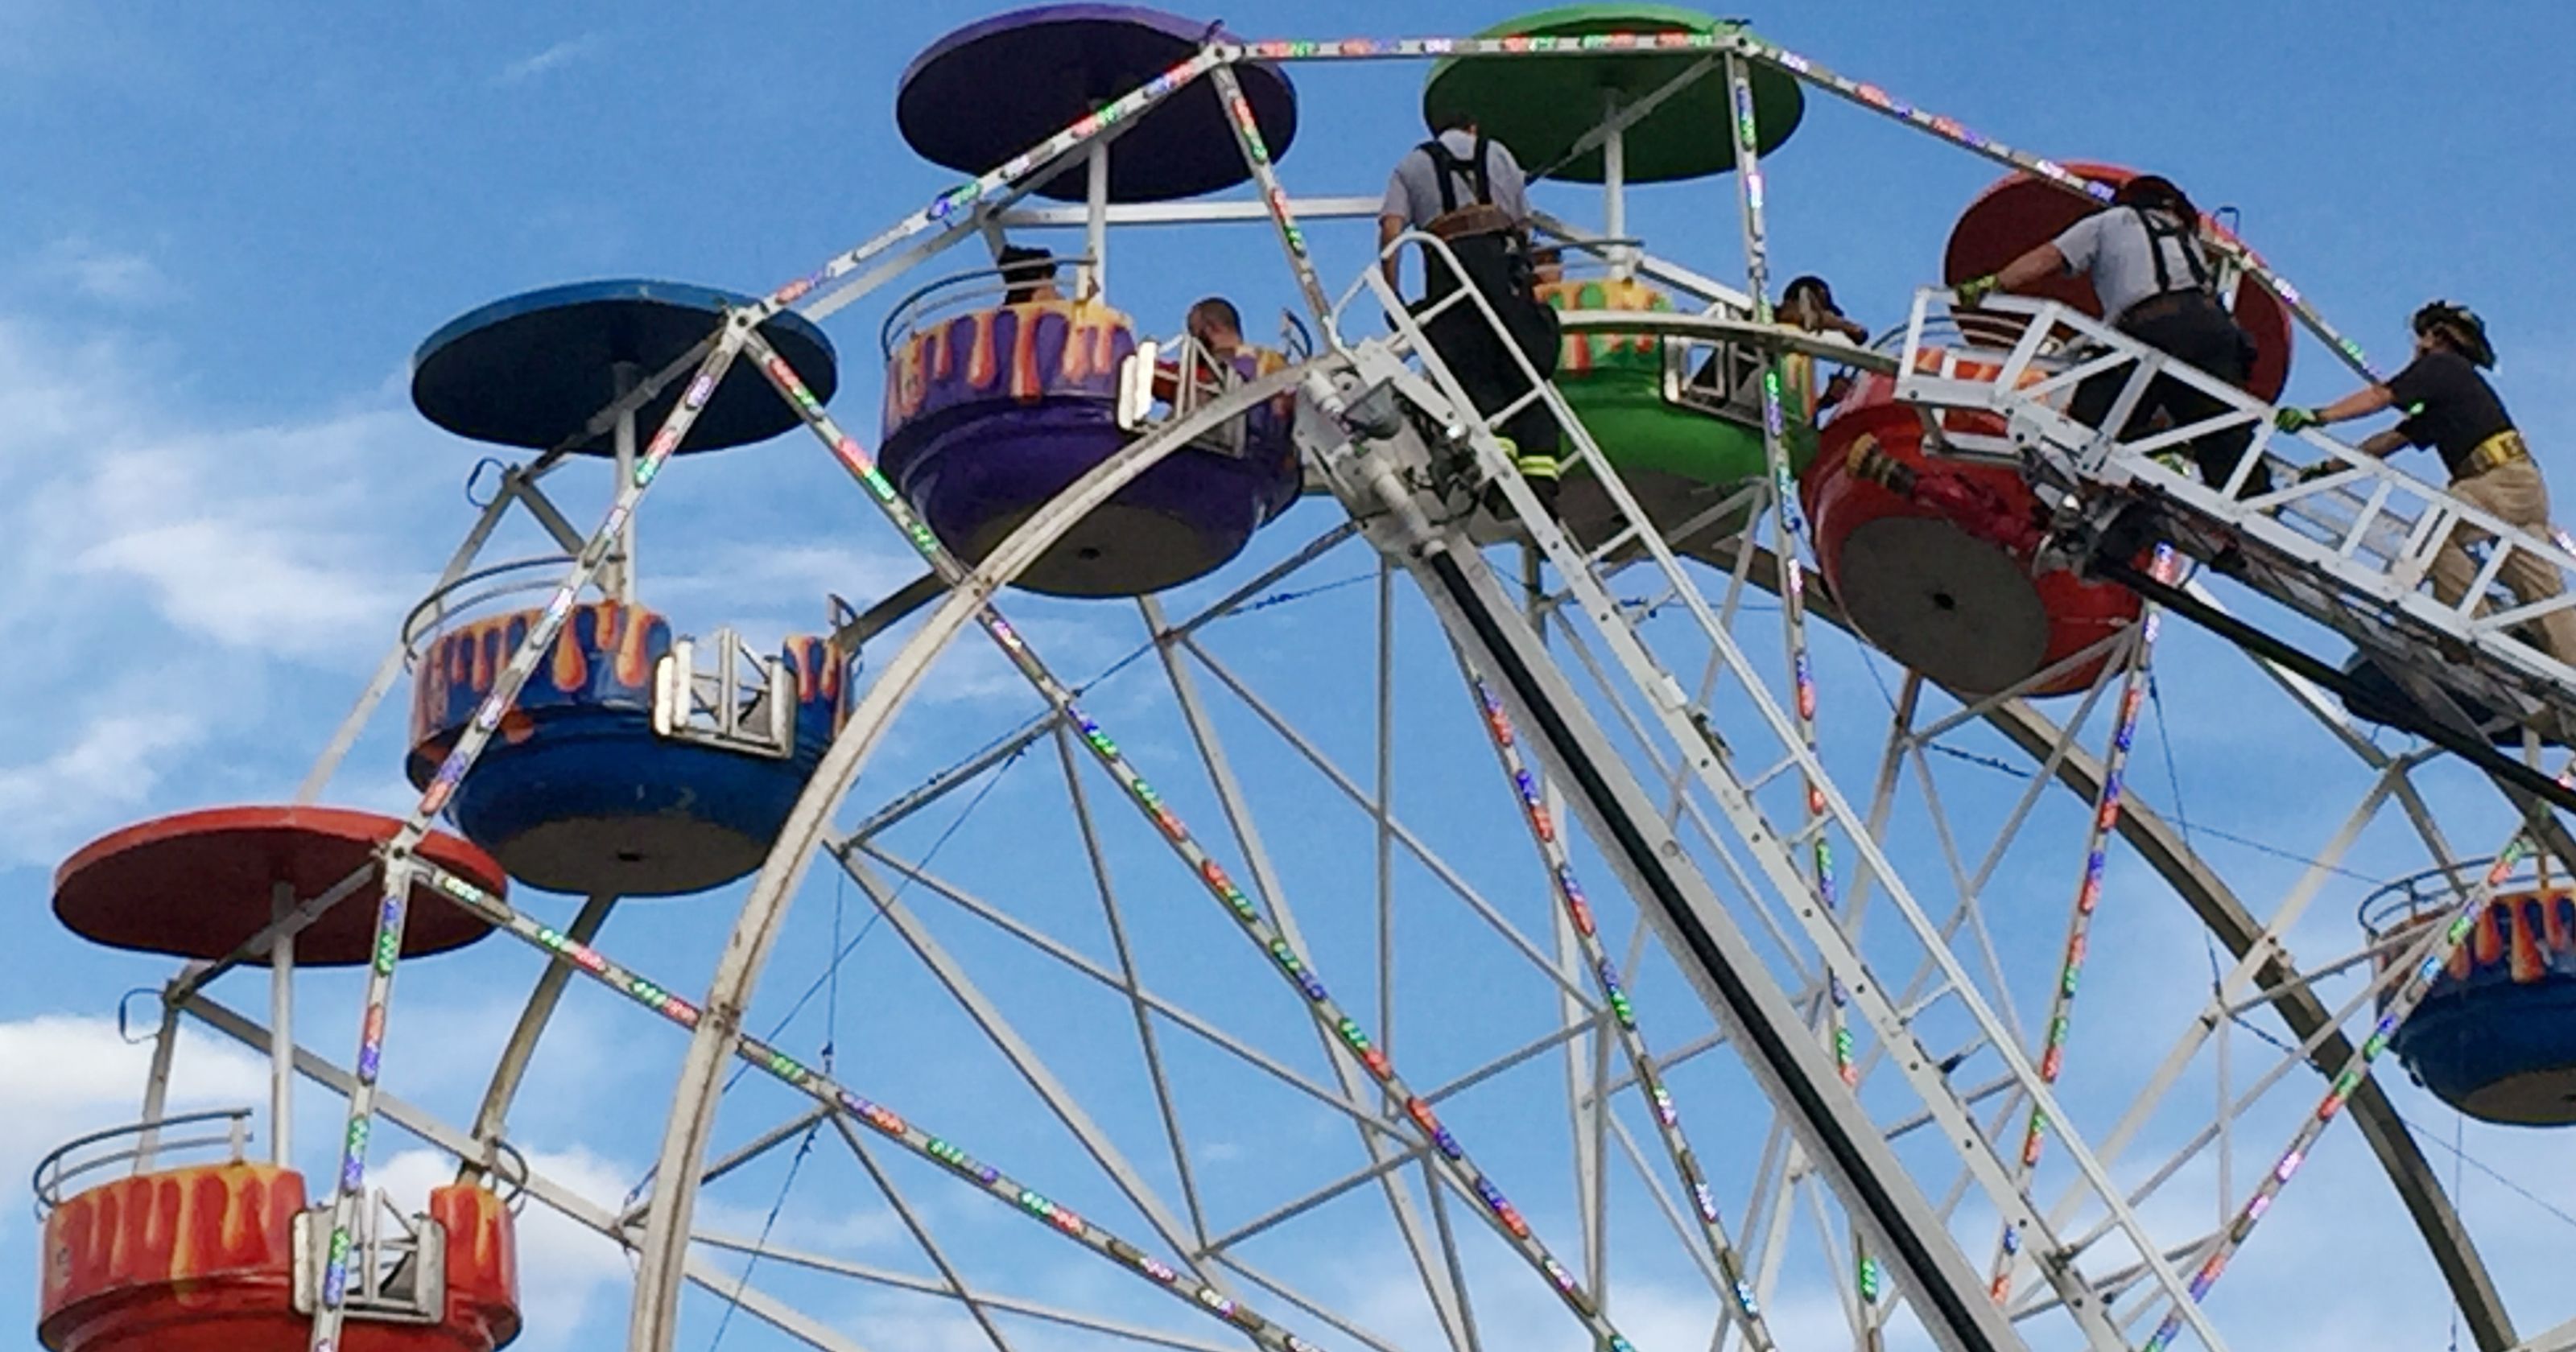 1 girl critically injured in fall from fair's Ferris wheel